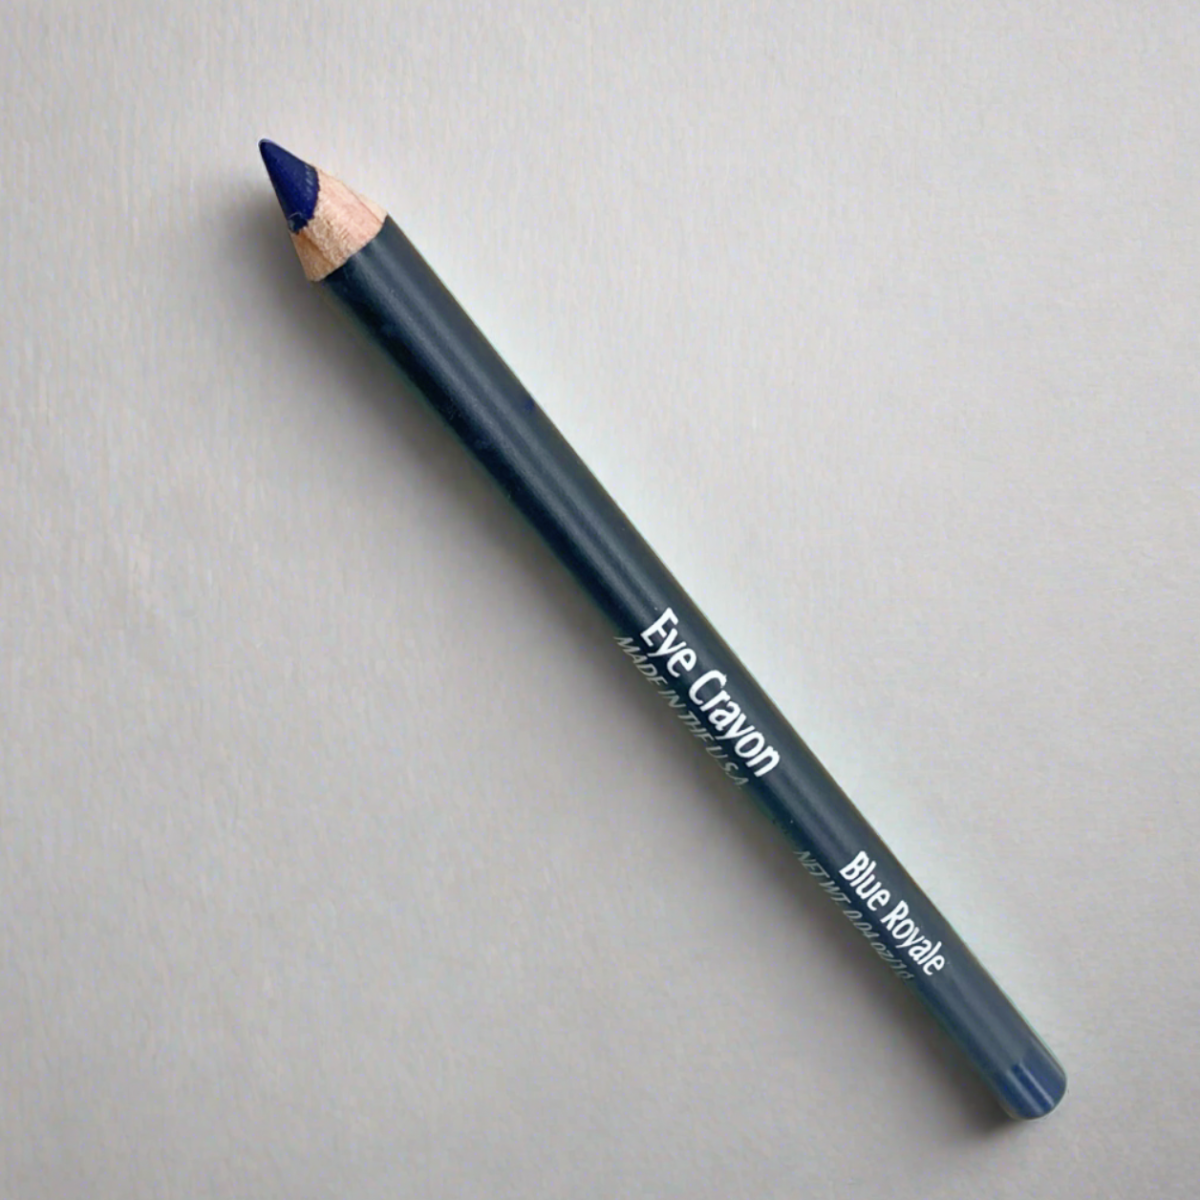 Eye Crayon showcasing its rich, velvety blue pigment